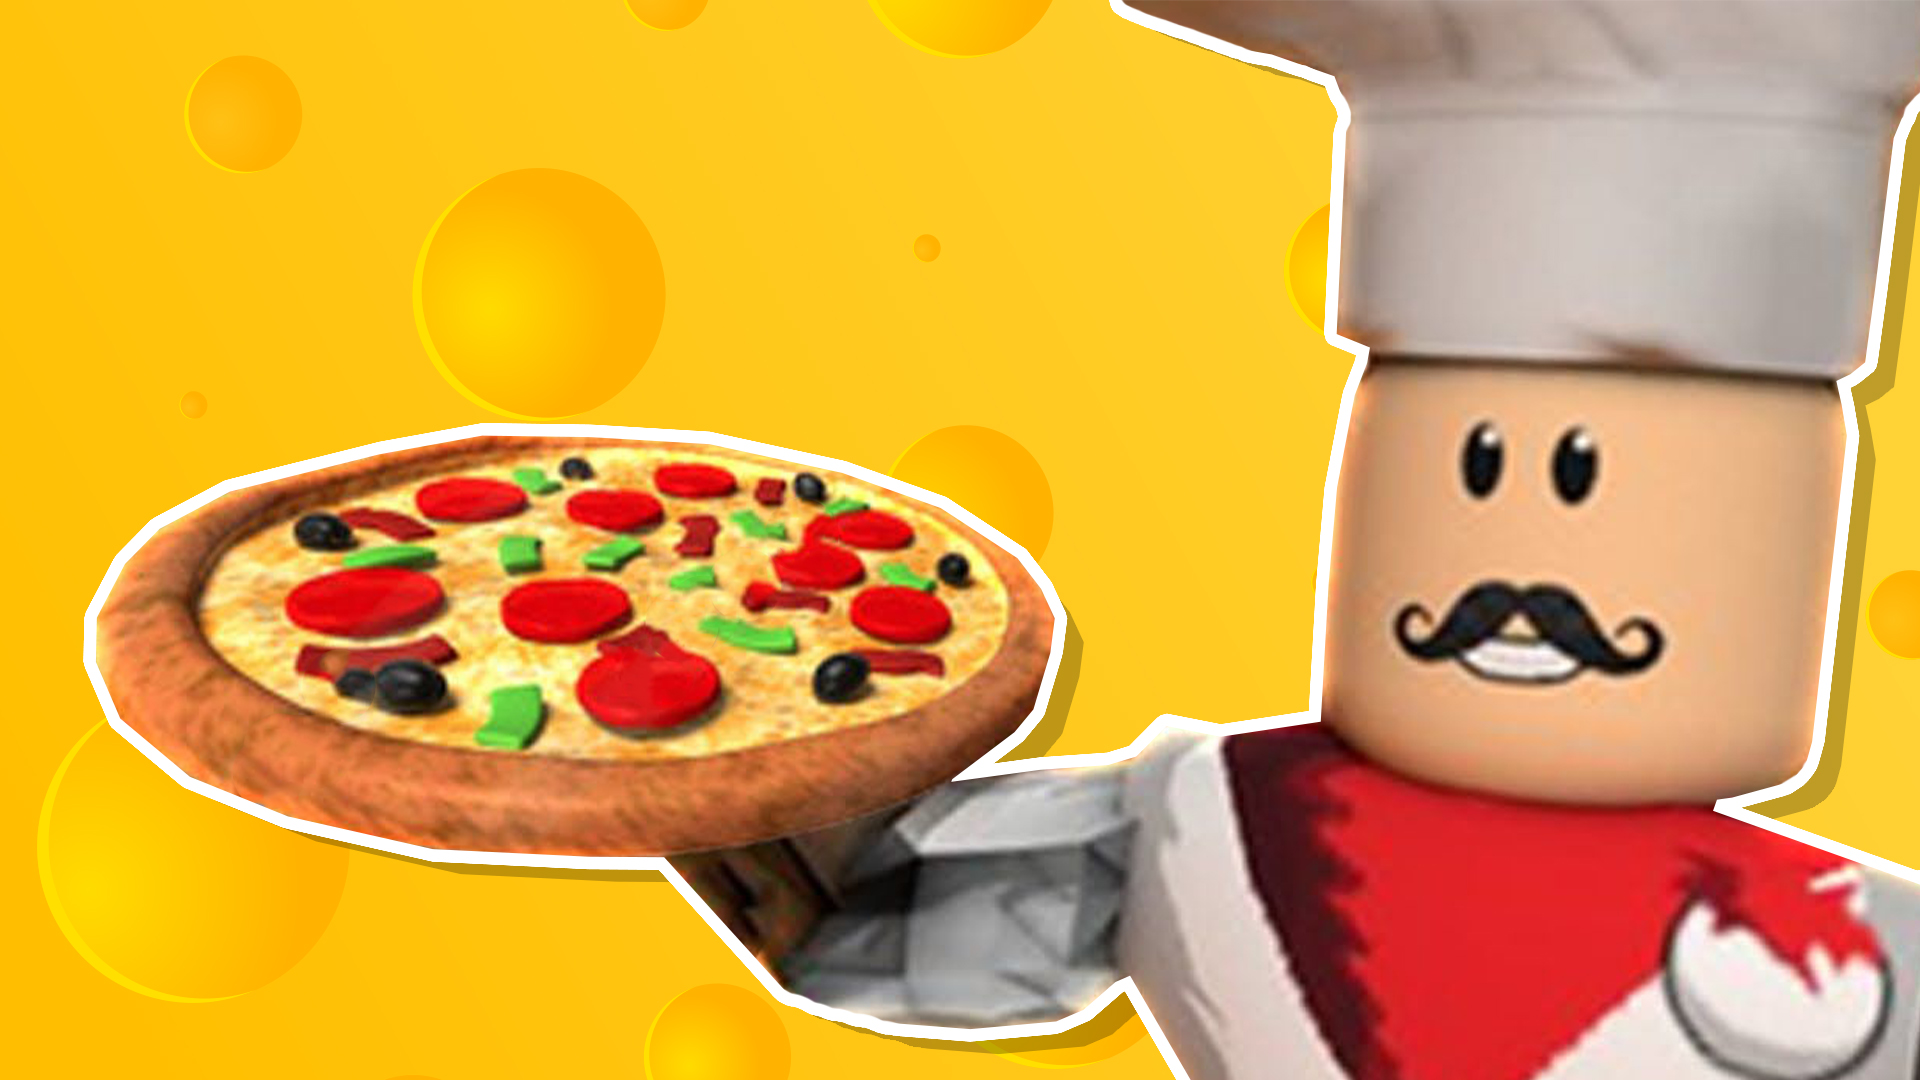 A pizza-themed joke